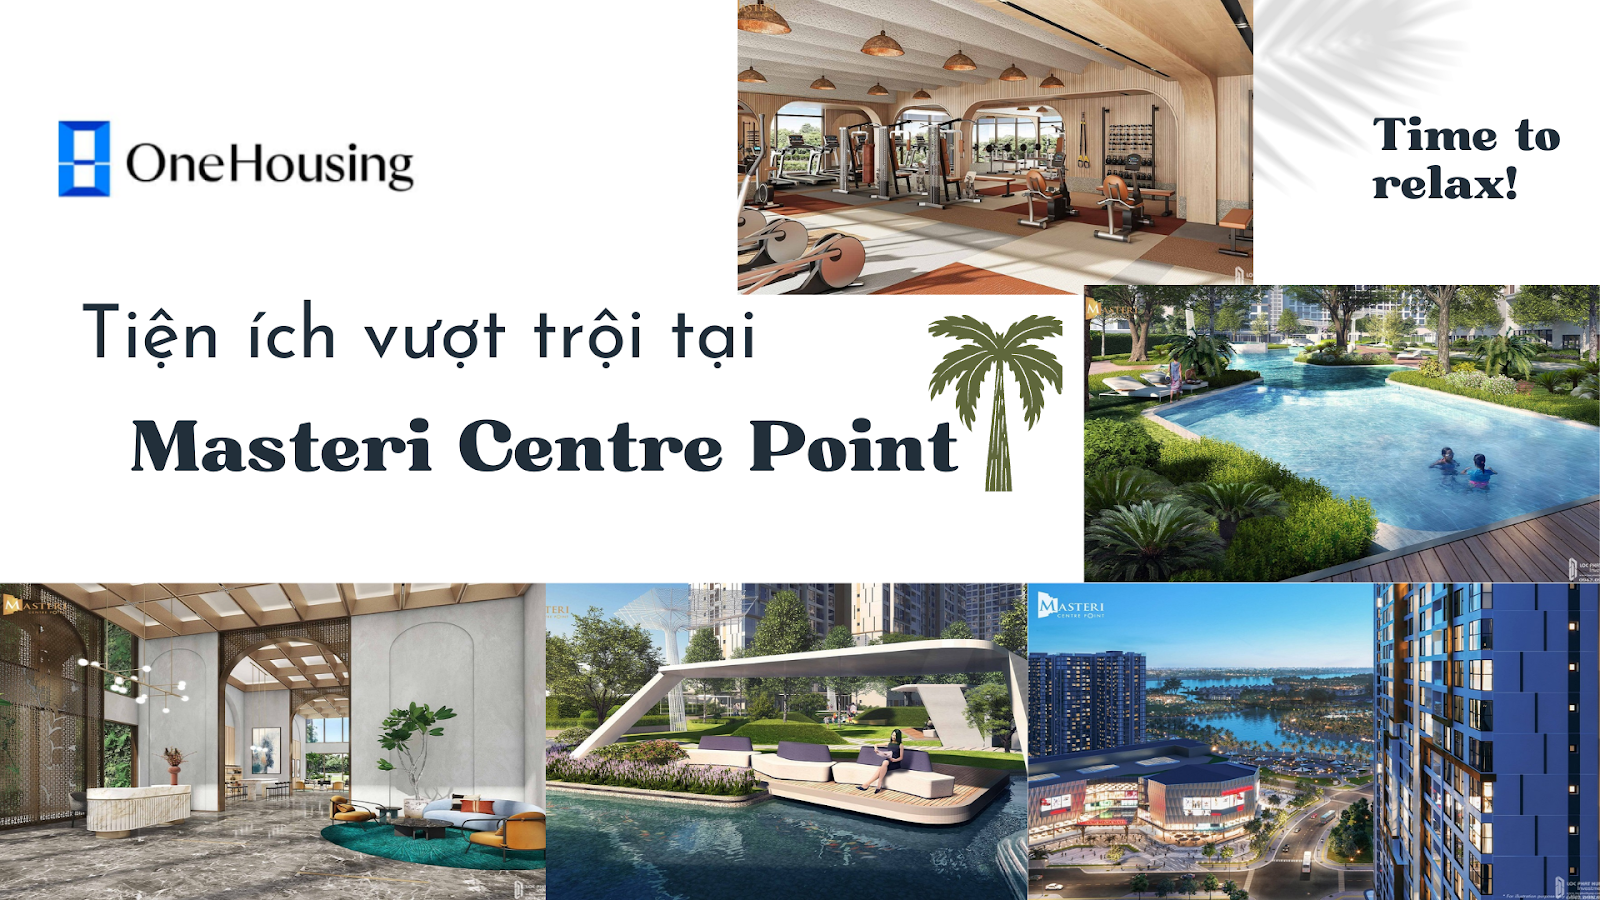 tan-huong-cuoi-tuan-voi-canh-quan-nhu-resort-ngay-duoi-ban-cong-nha-masteri-centre-point-onehousing-3